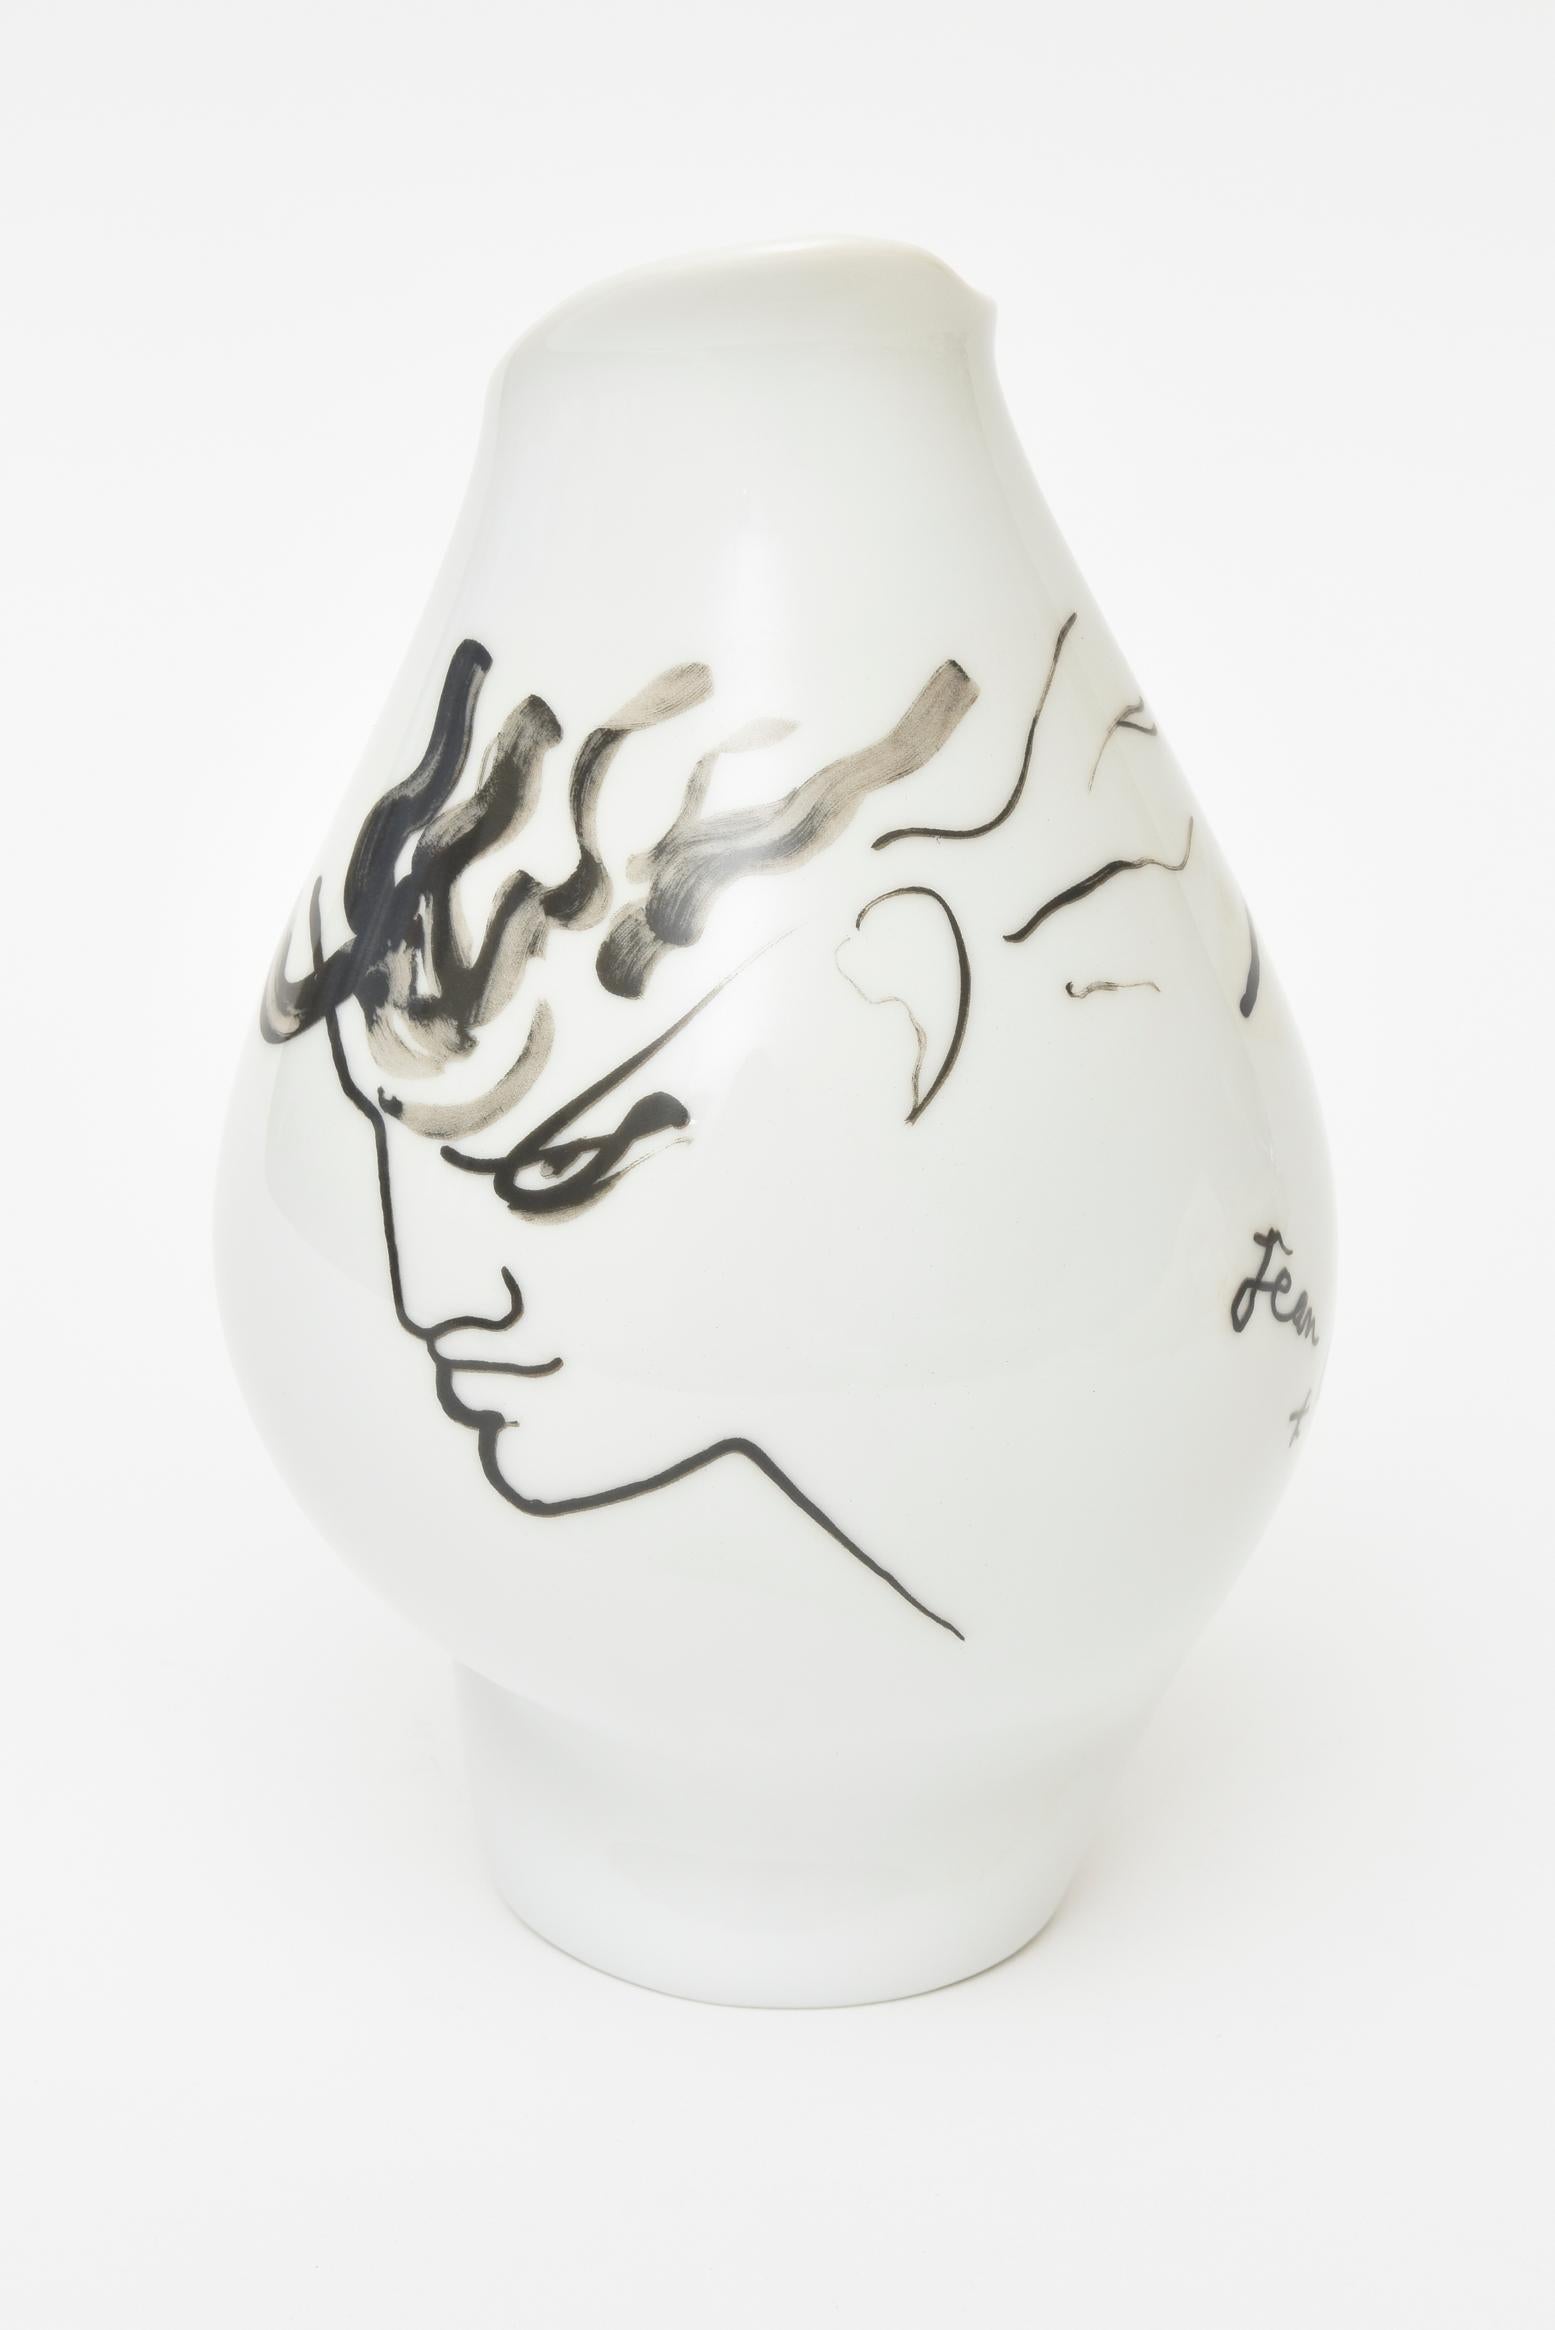 Glazed Jean Cocteau for Rosenthal Tetes Face Porcelain Hand Painted Vase Vessel